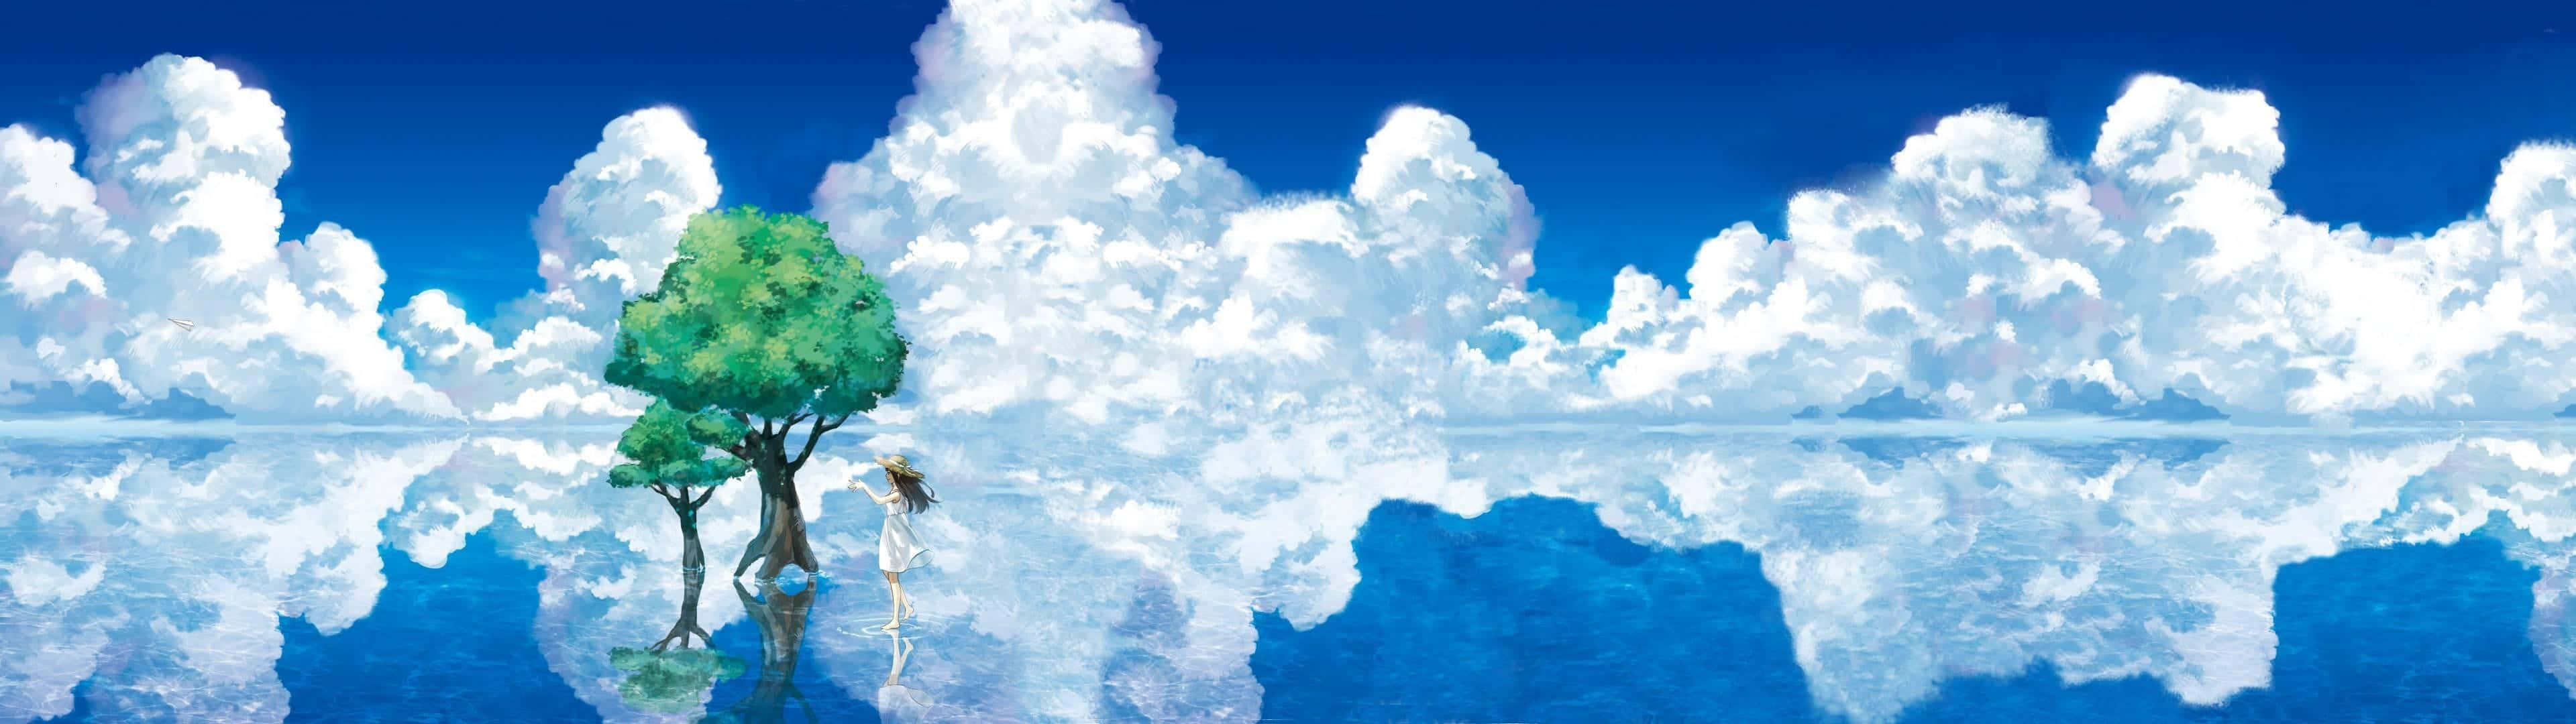 Enjoy this gorgeous 3840 x 1080 Anime HD wallpapers Wallpaper